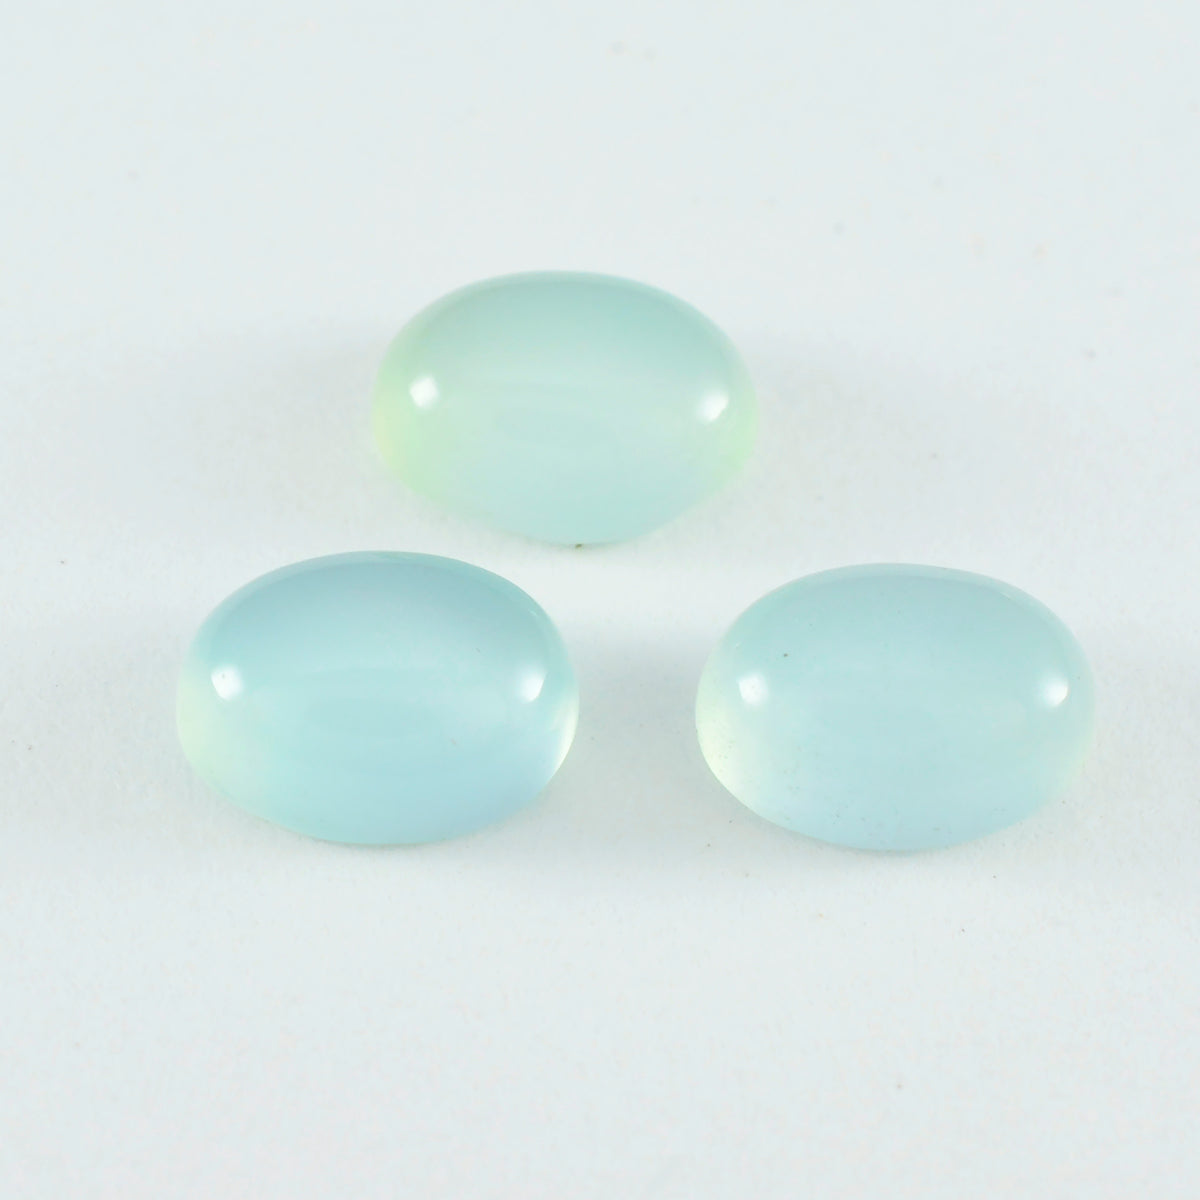 Riyogems 1PC Aqua Chalcedony Cabochon 6x8 mm Oval Shape attractive Quality Gems